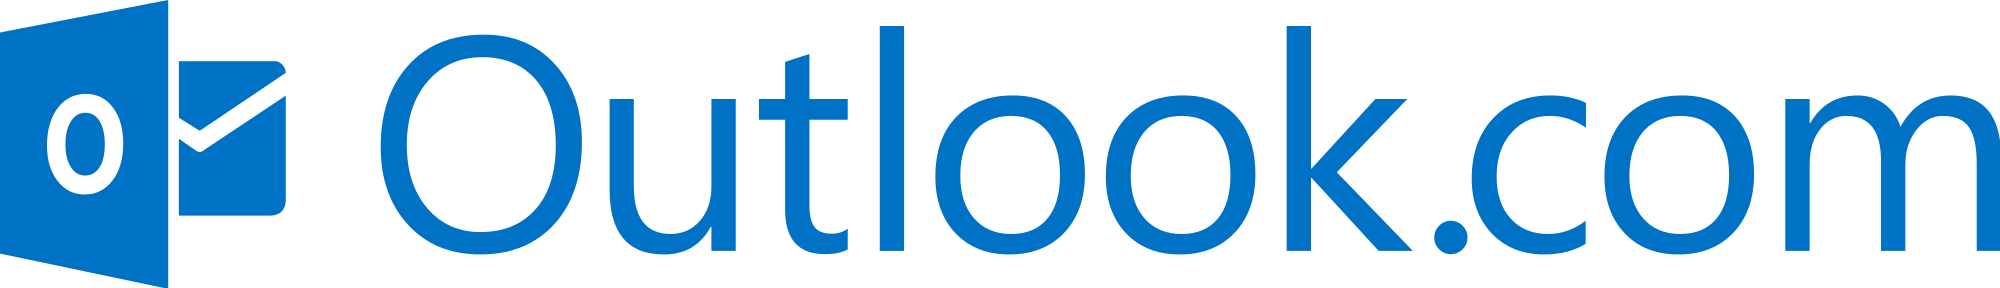 outlook.com logo hd png #34062